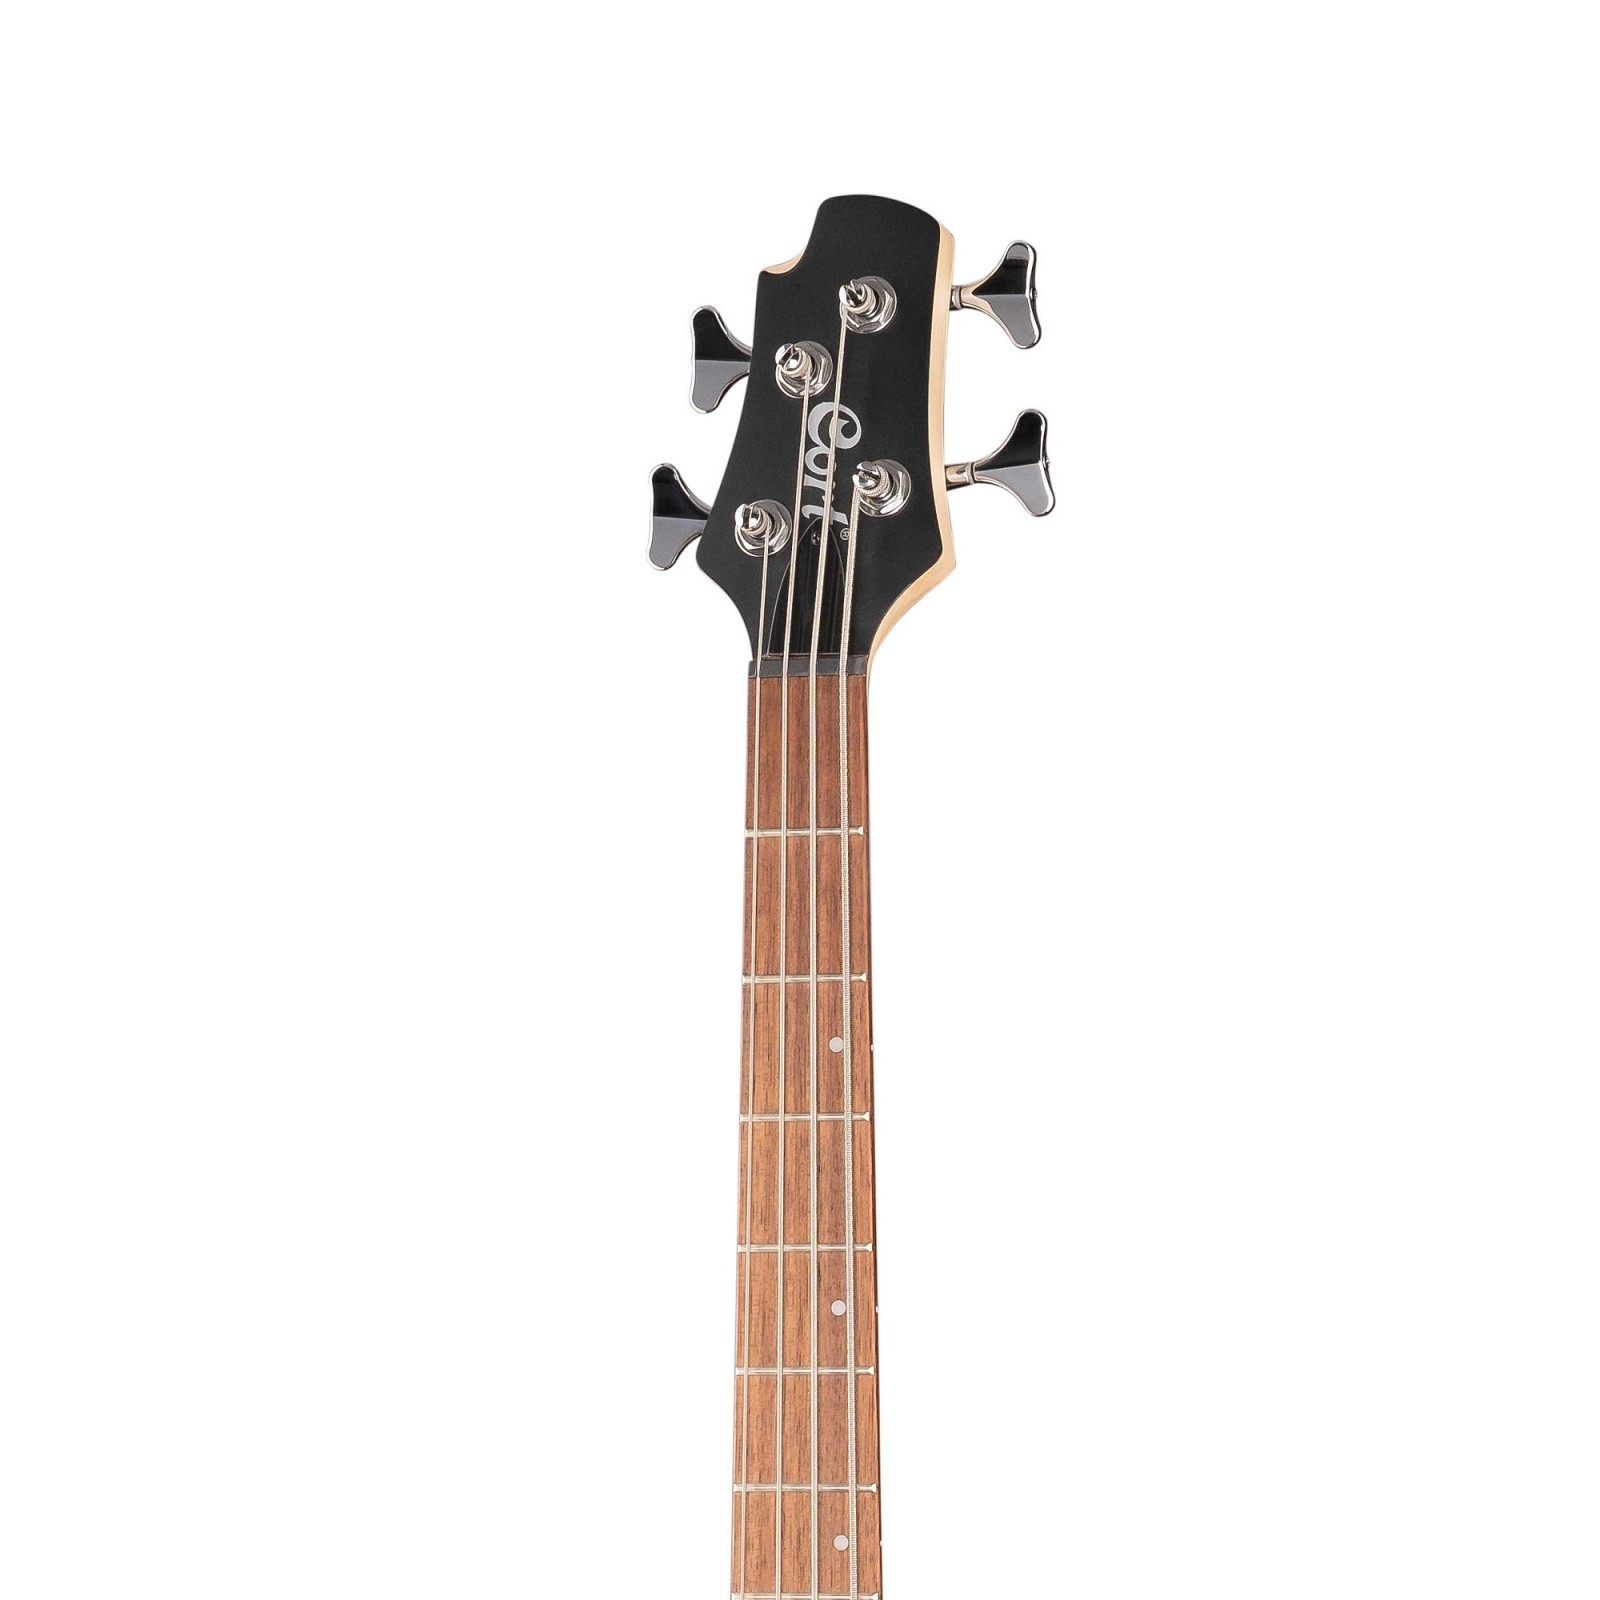 Cort бас гитара 4 струны. Cort Action-Bass-Plus-BK. Cort Action-Bass-Plus-LH-BK Action Series. Cort Action Bass Plus Series.